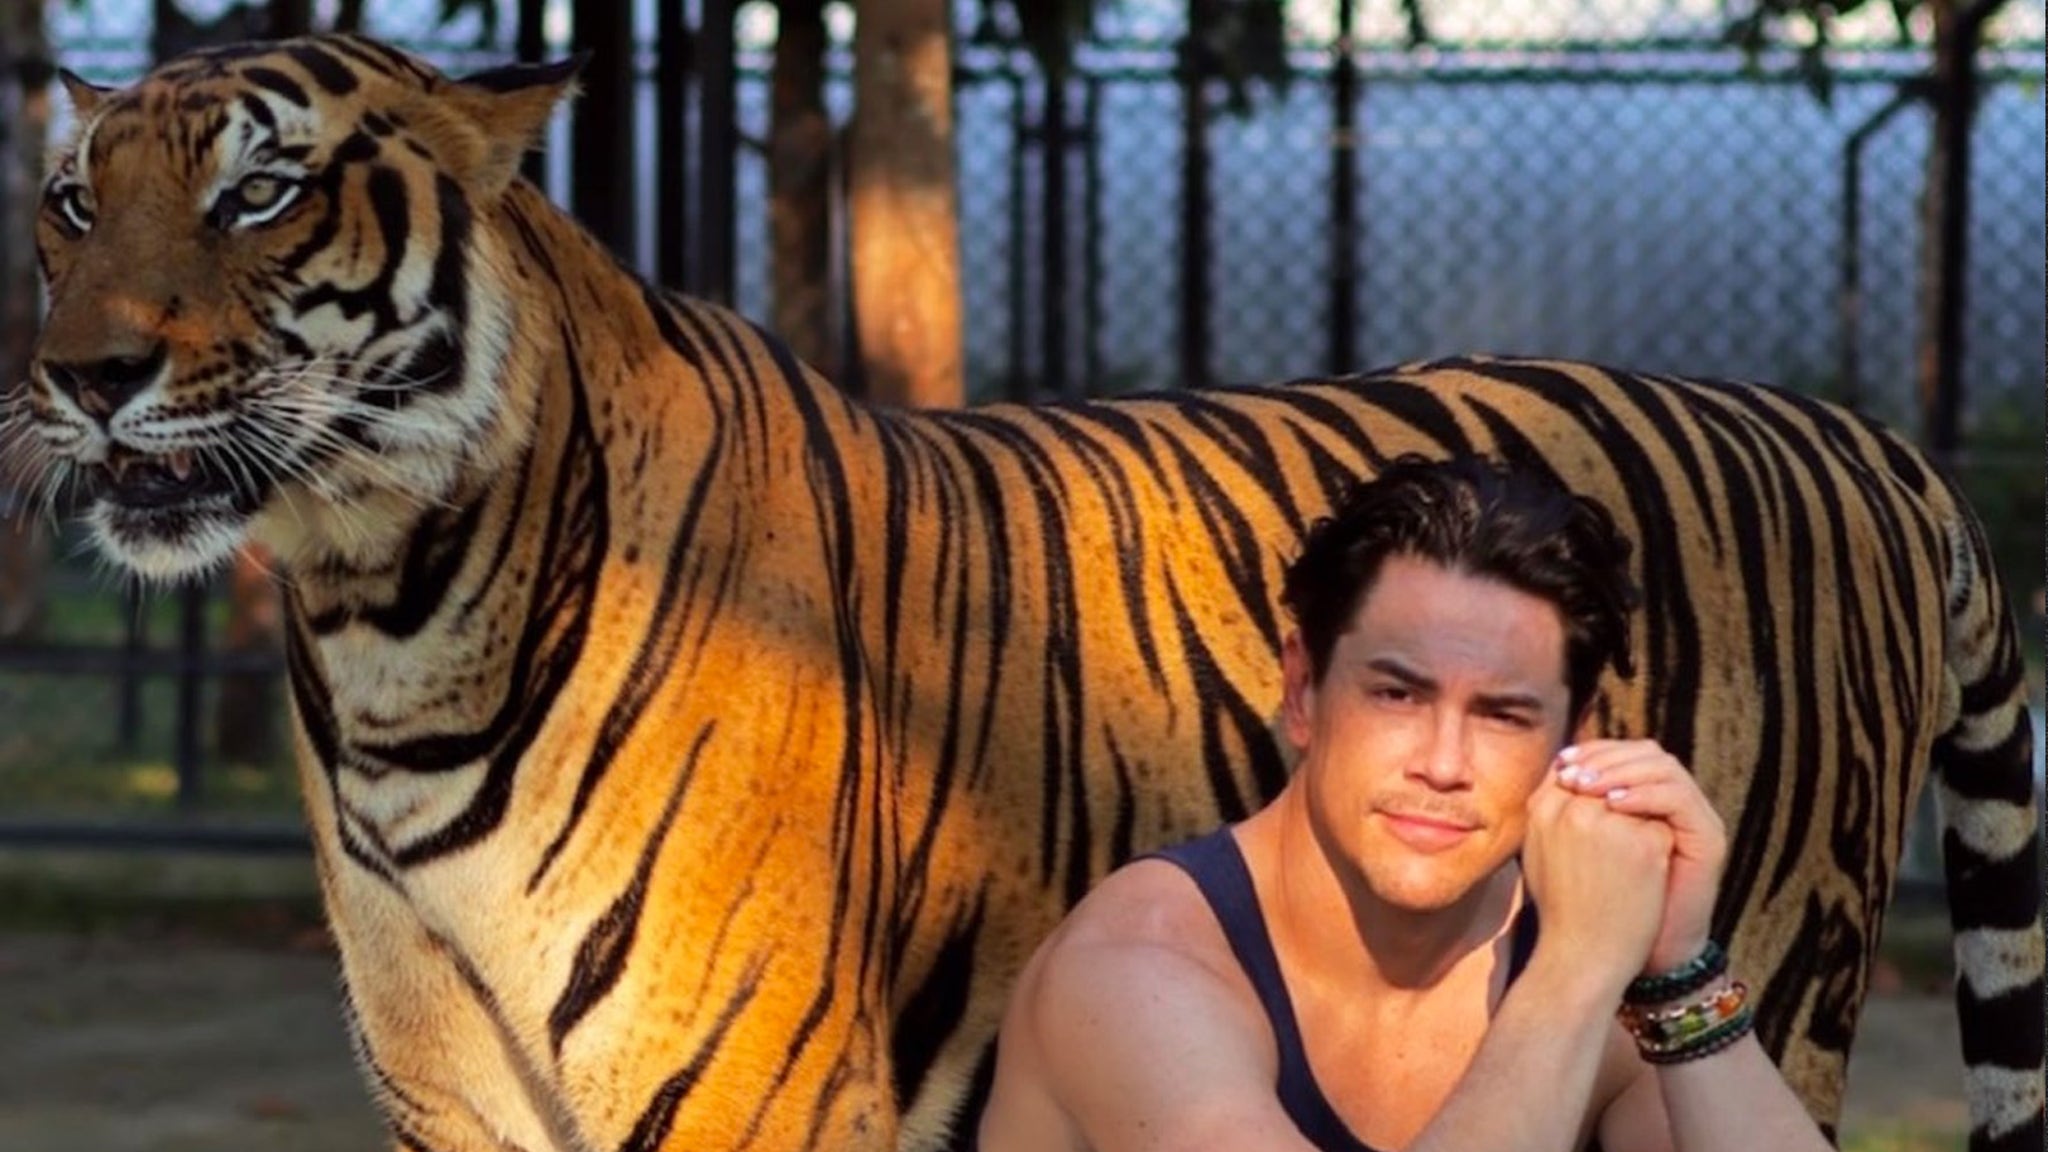 Shameful' Tom Sandoval Blasted For Visiting Tiger Zoo, Accused of